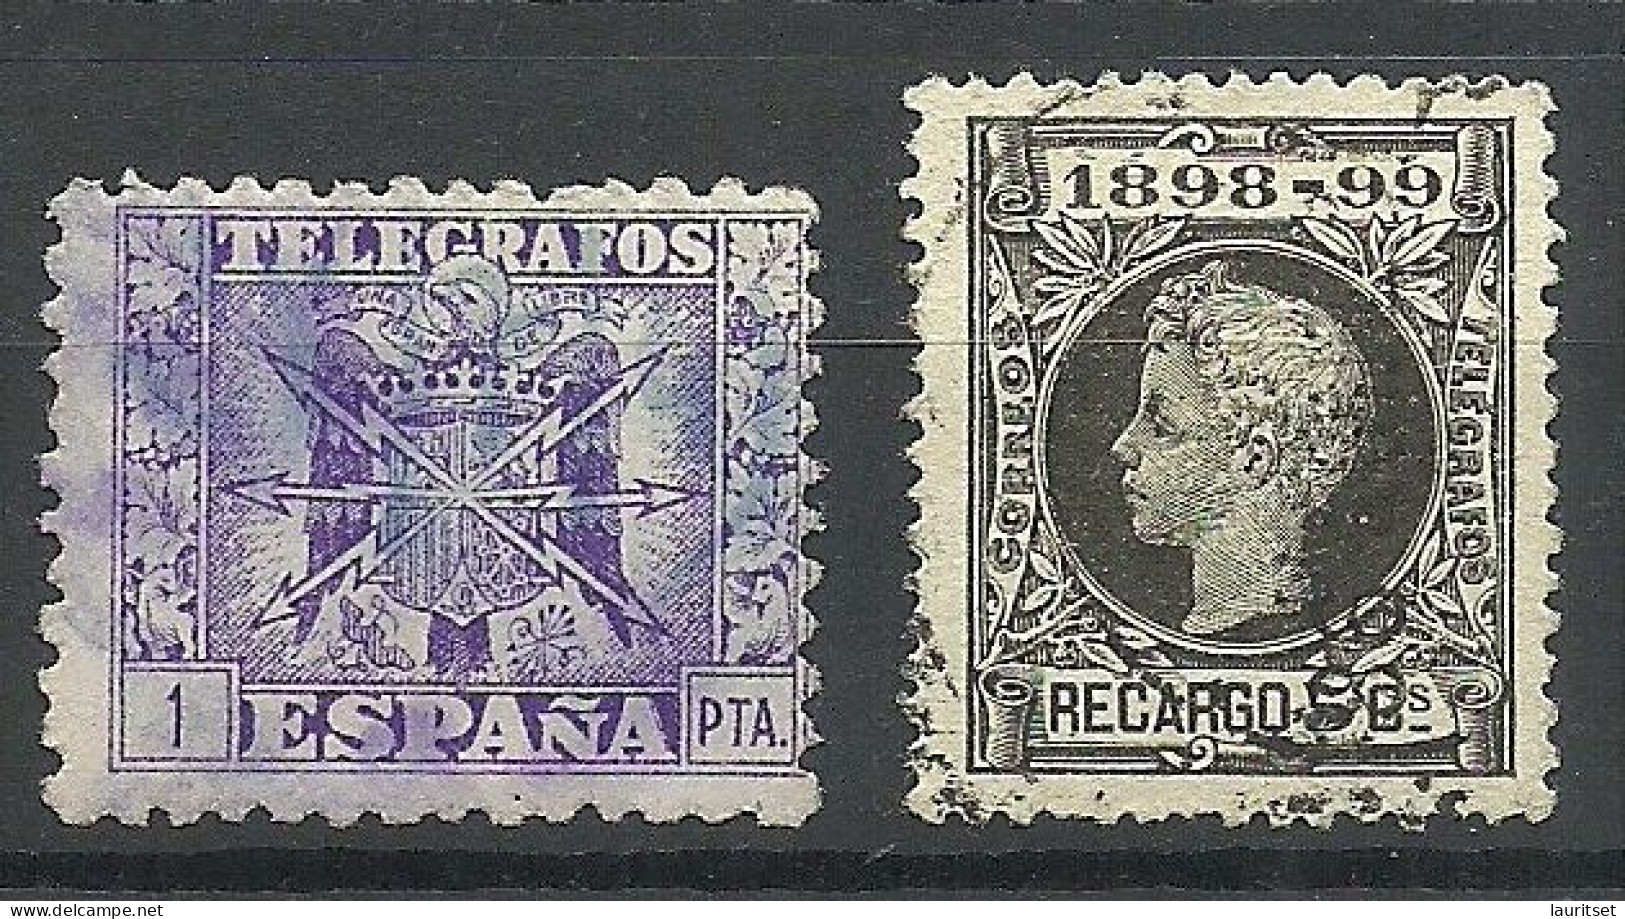 SPAIN Spanien Espana Telegrafos Telegraph Stamps Telegraphe, 2 Stamps, O - Télégraphe